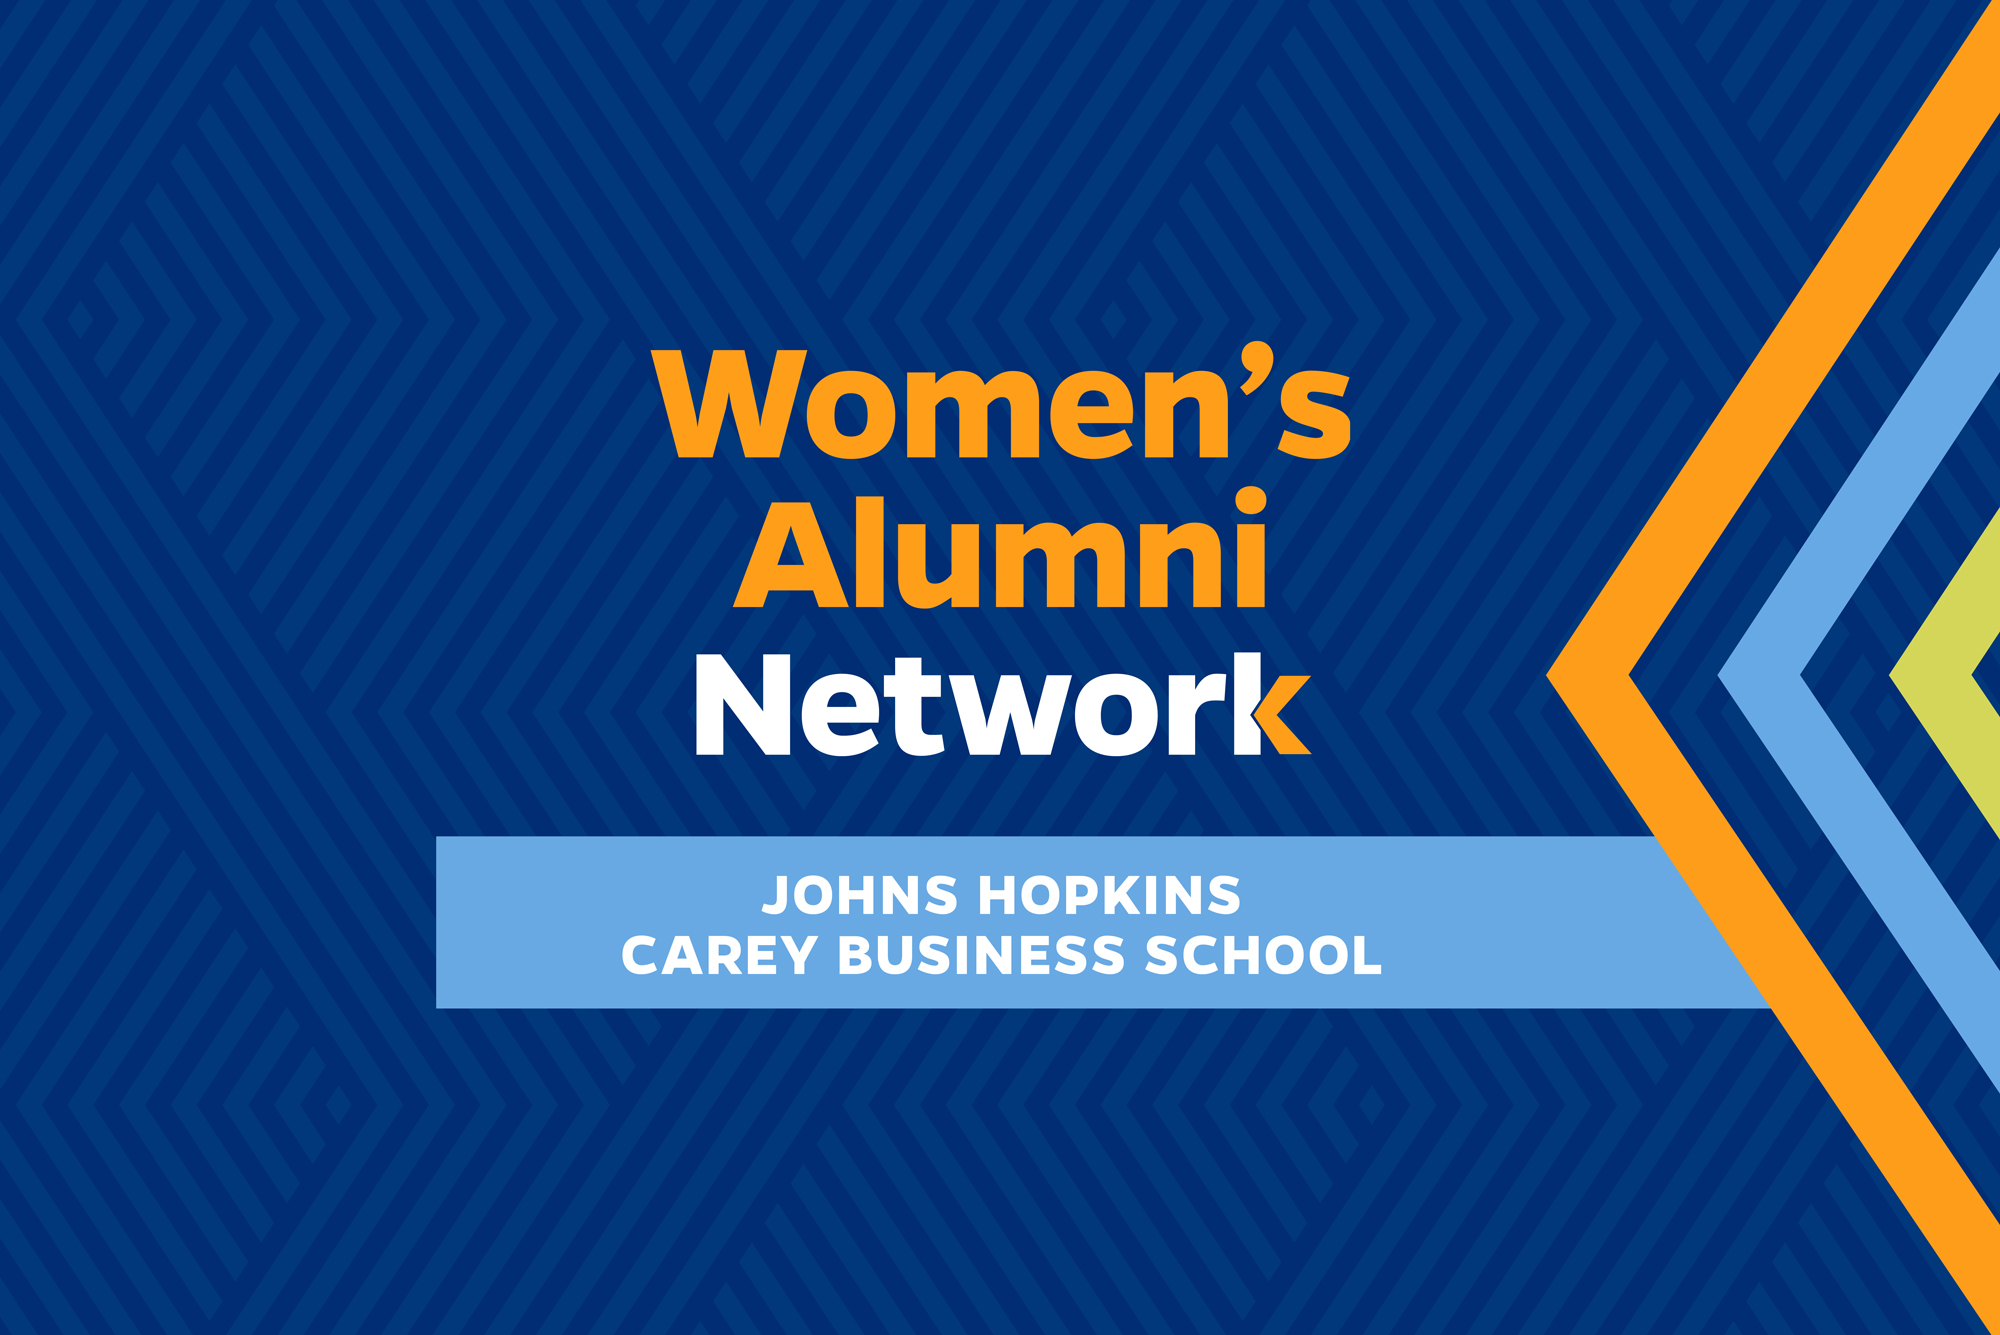 Carey Business School: Women's Alumni Network Launch